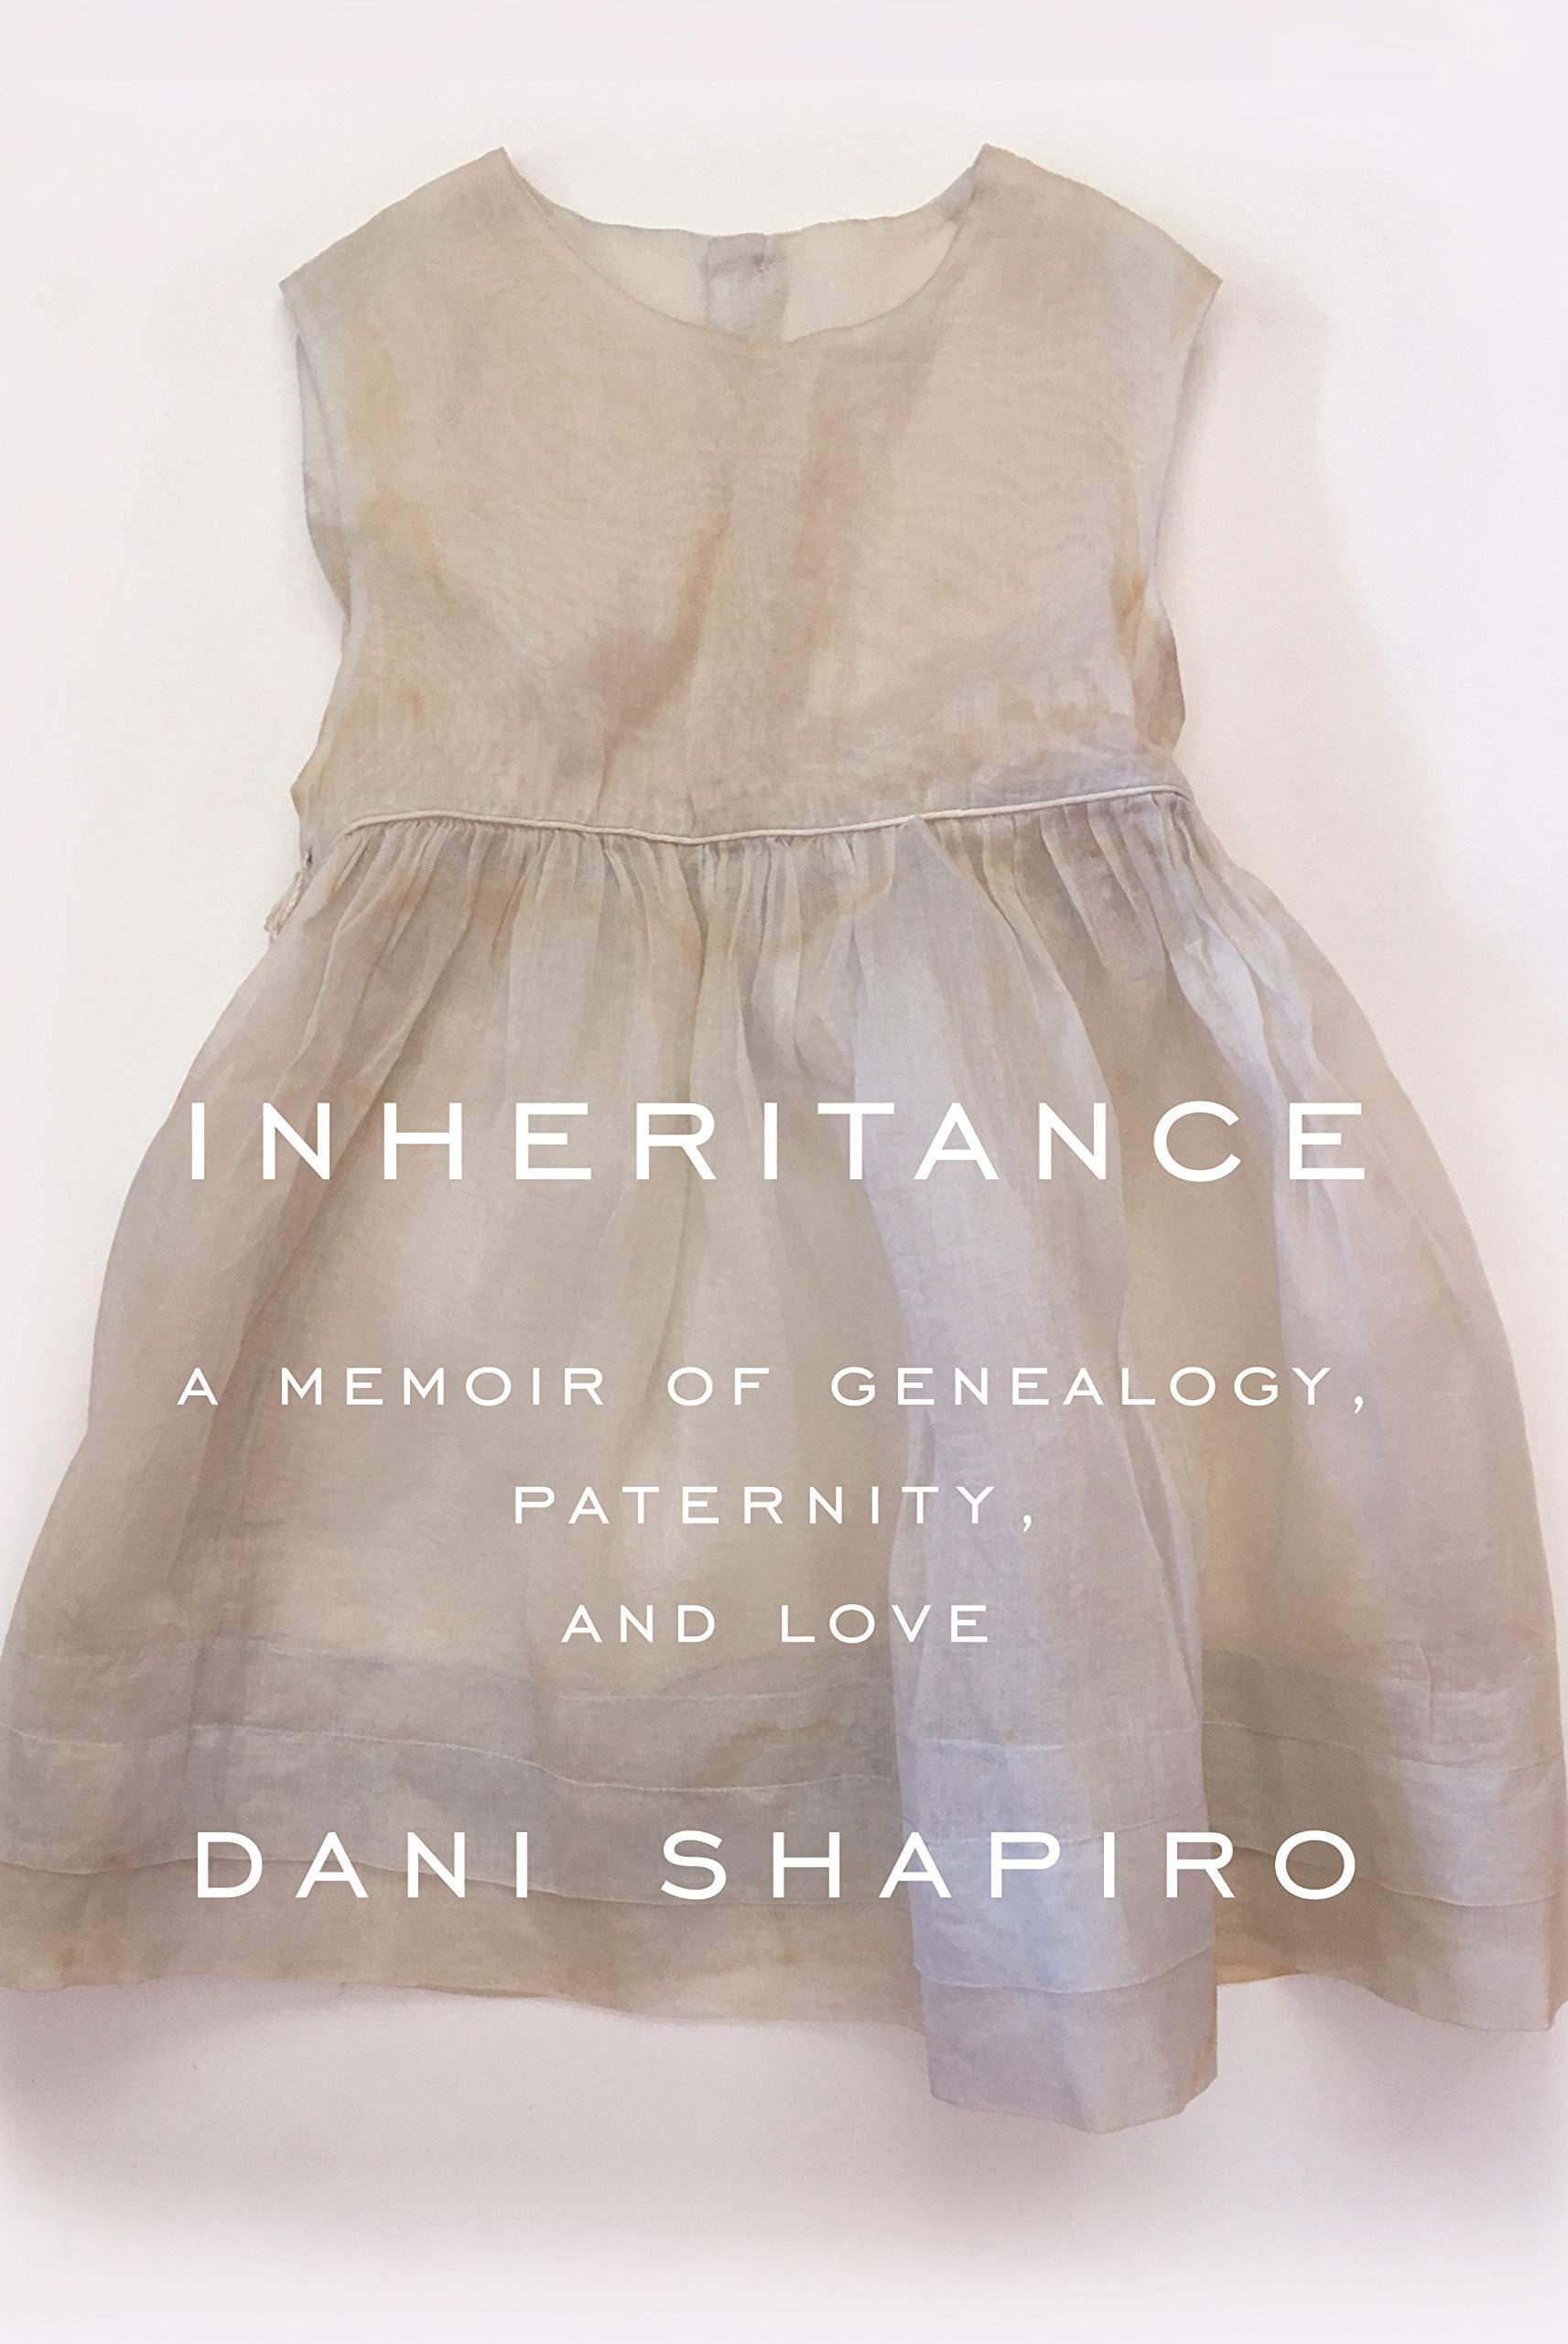 Inheritance by Dani Shapiro book cover